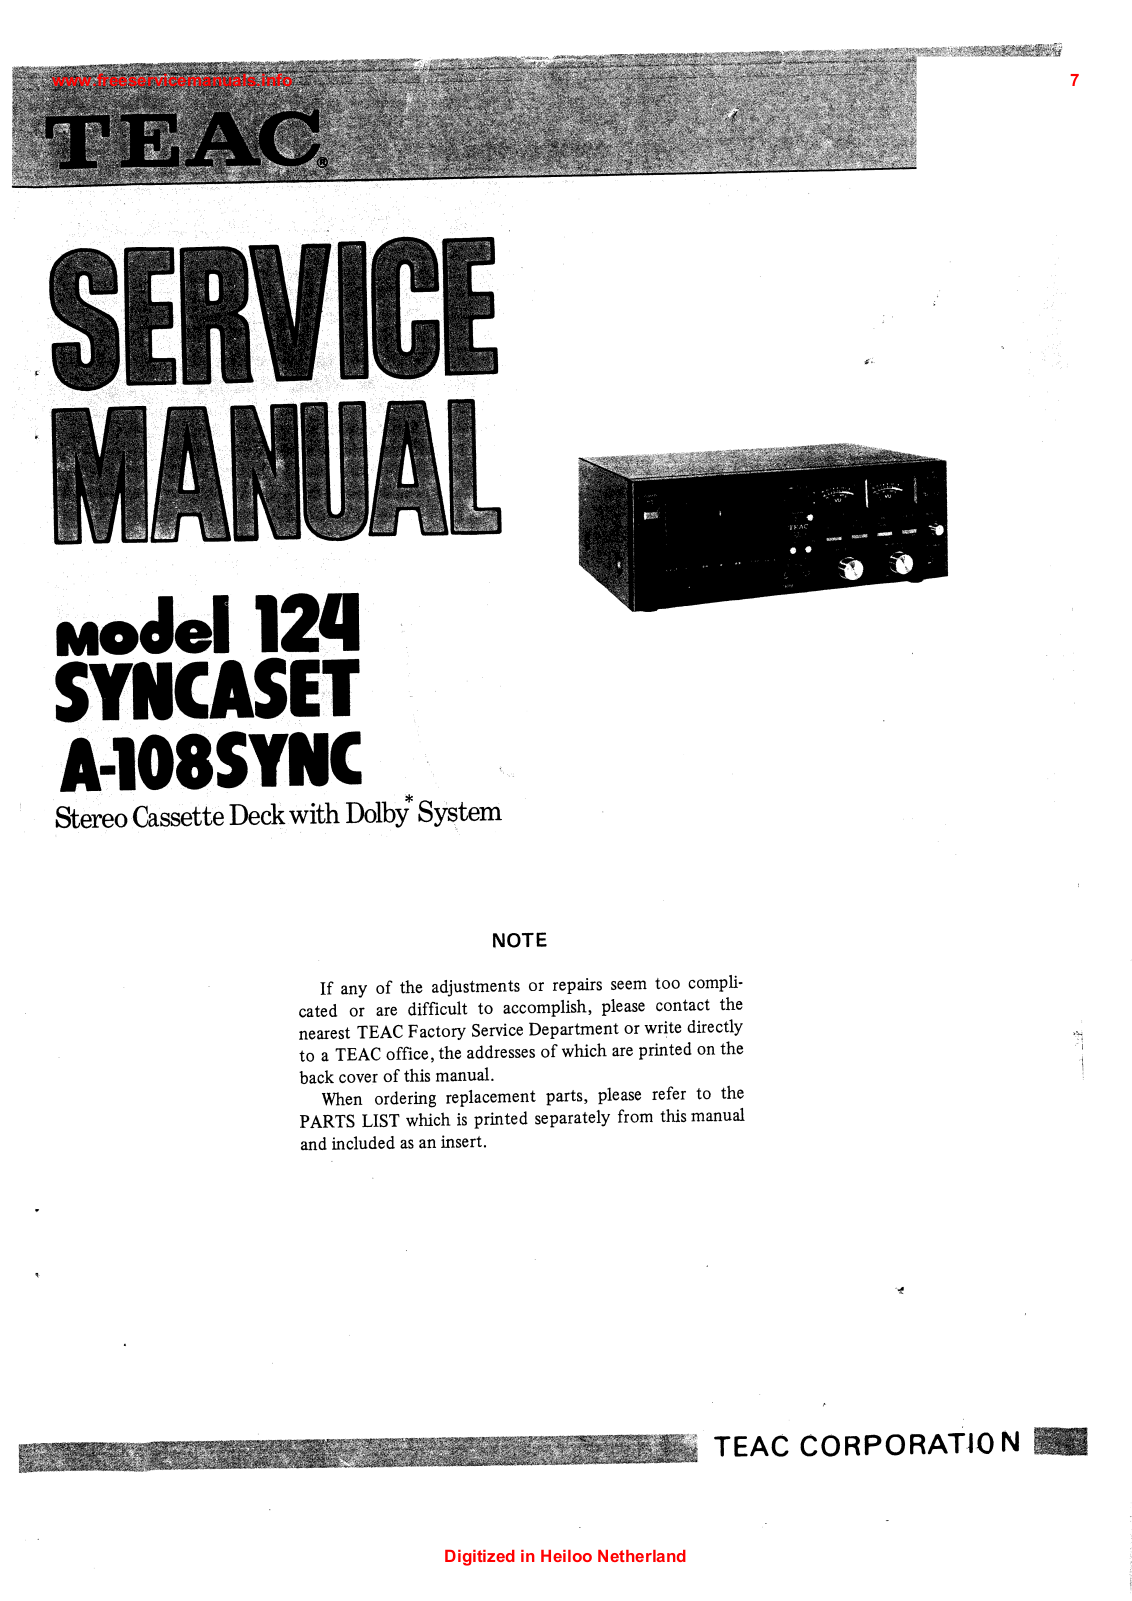 Teac 124 SYNCASET Service Manual